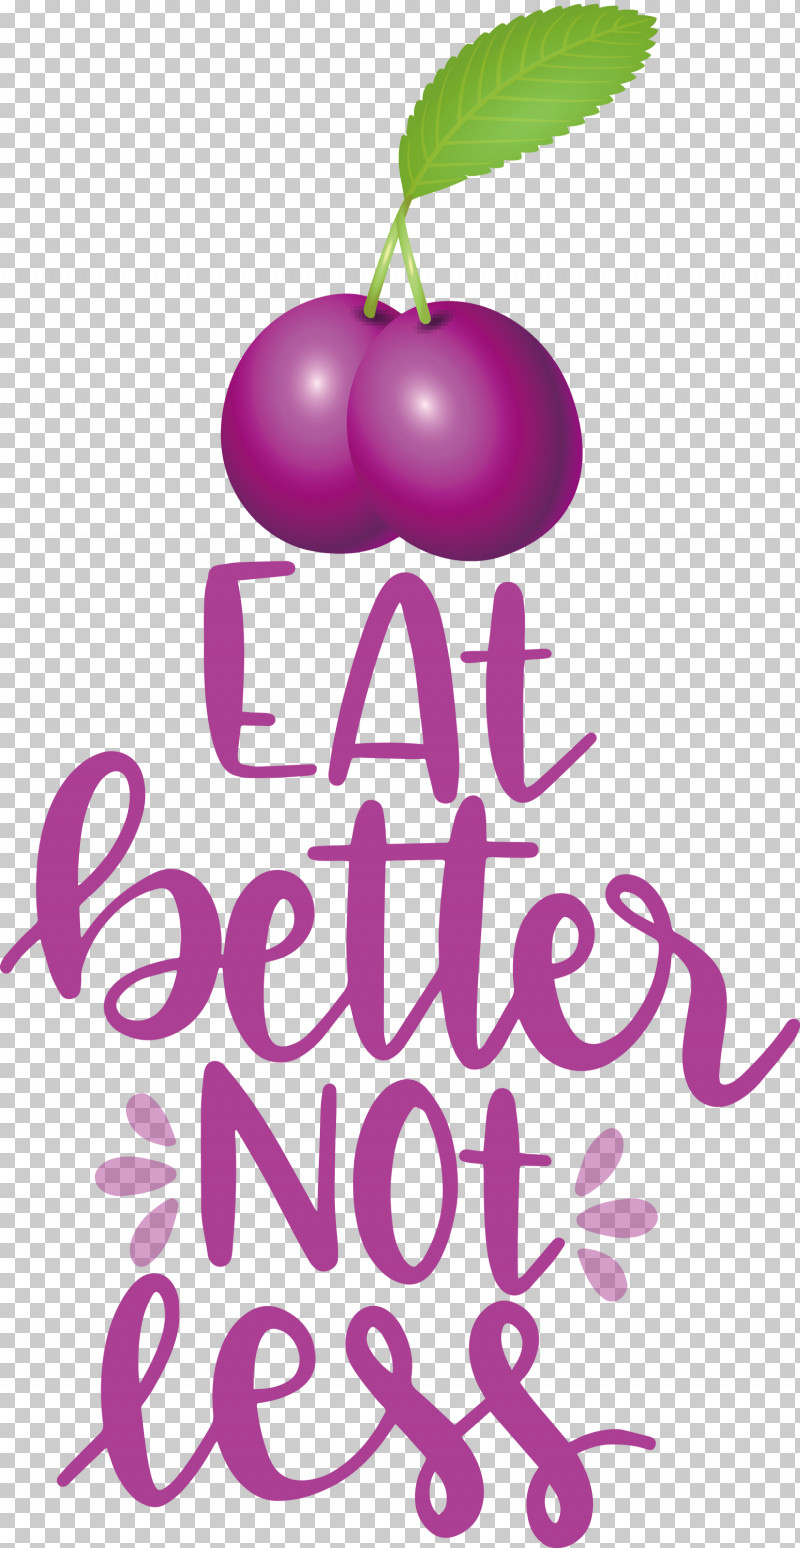 Eat Better Not Less Food Kitchen PNG, Clipart, Biology, Flower, Food, Fruit, Kitchen Free PNG Download